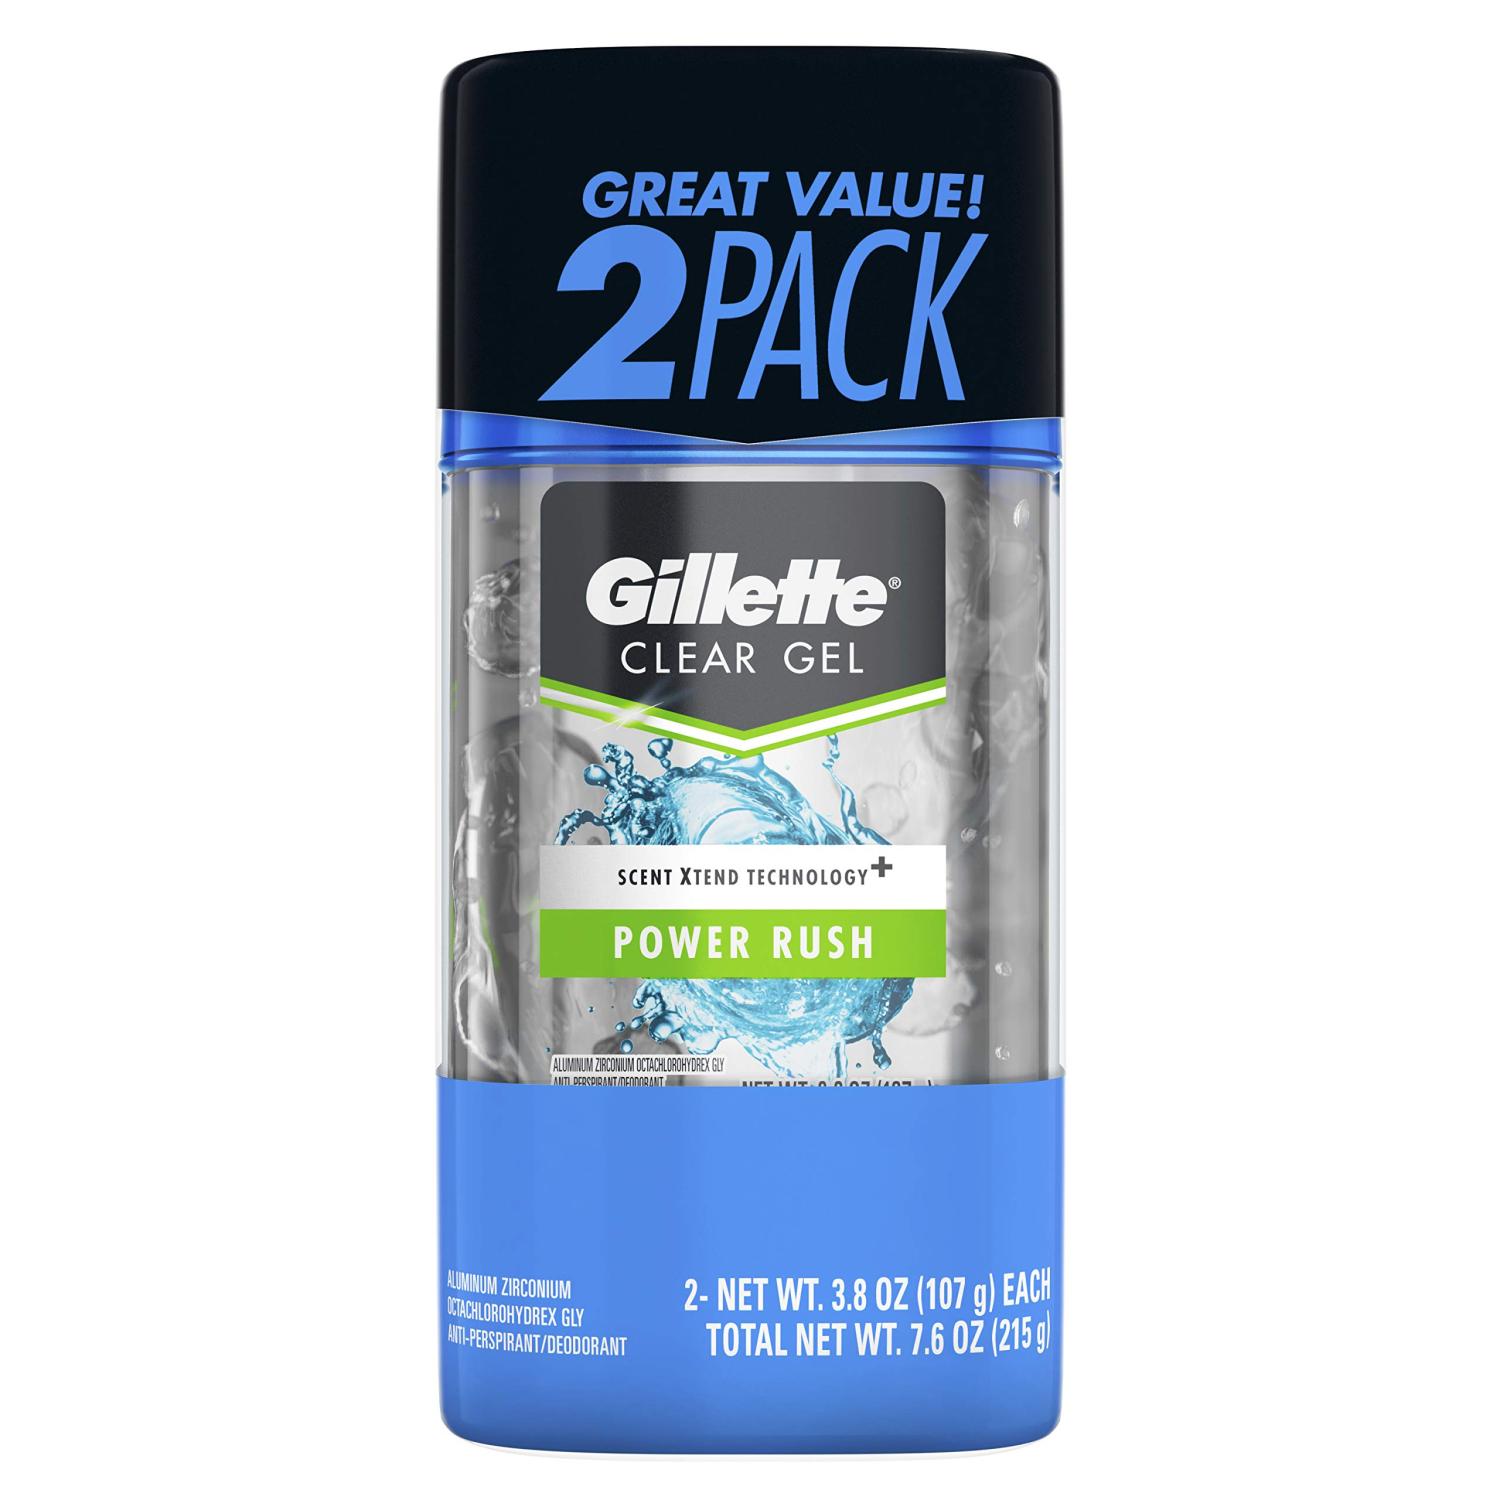 Gillette Clear Gel Power Rush Anti-Perspirant Deodorant 3.8 Oz Pack of 2